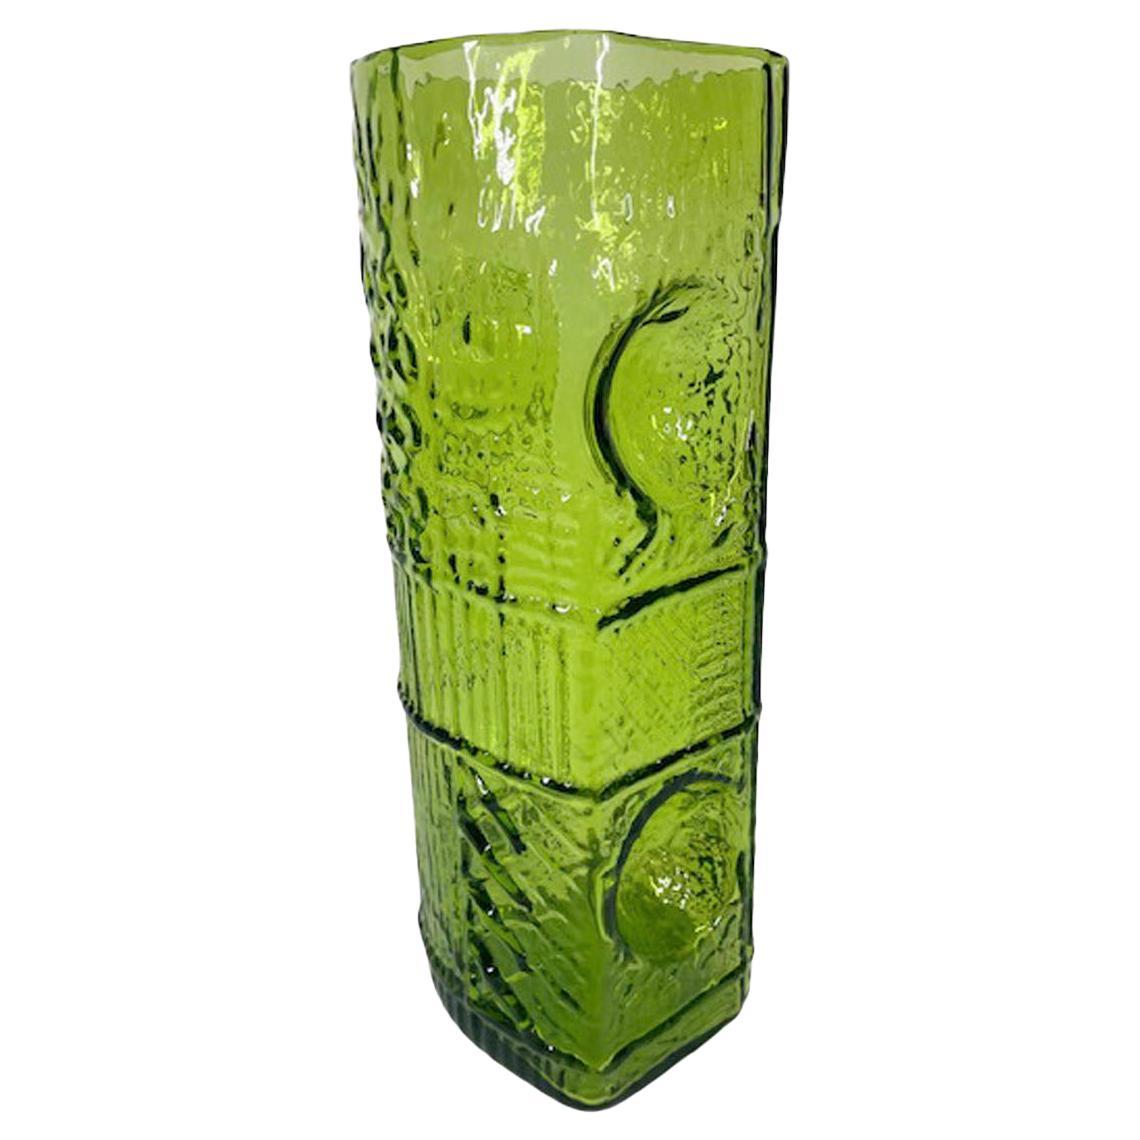 Blenko-Vase aus grünem Glas im Vintage-Stil mit erhöhtem, geformtem Design